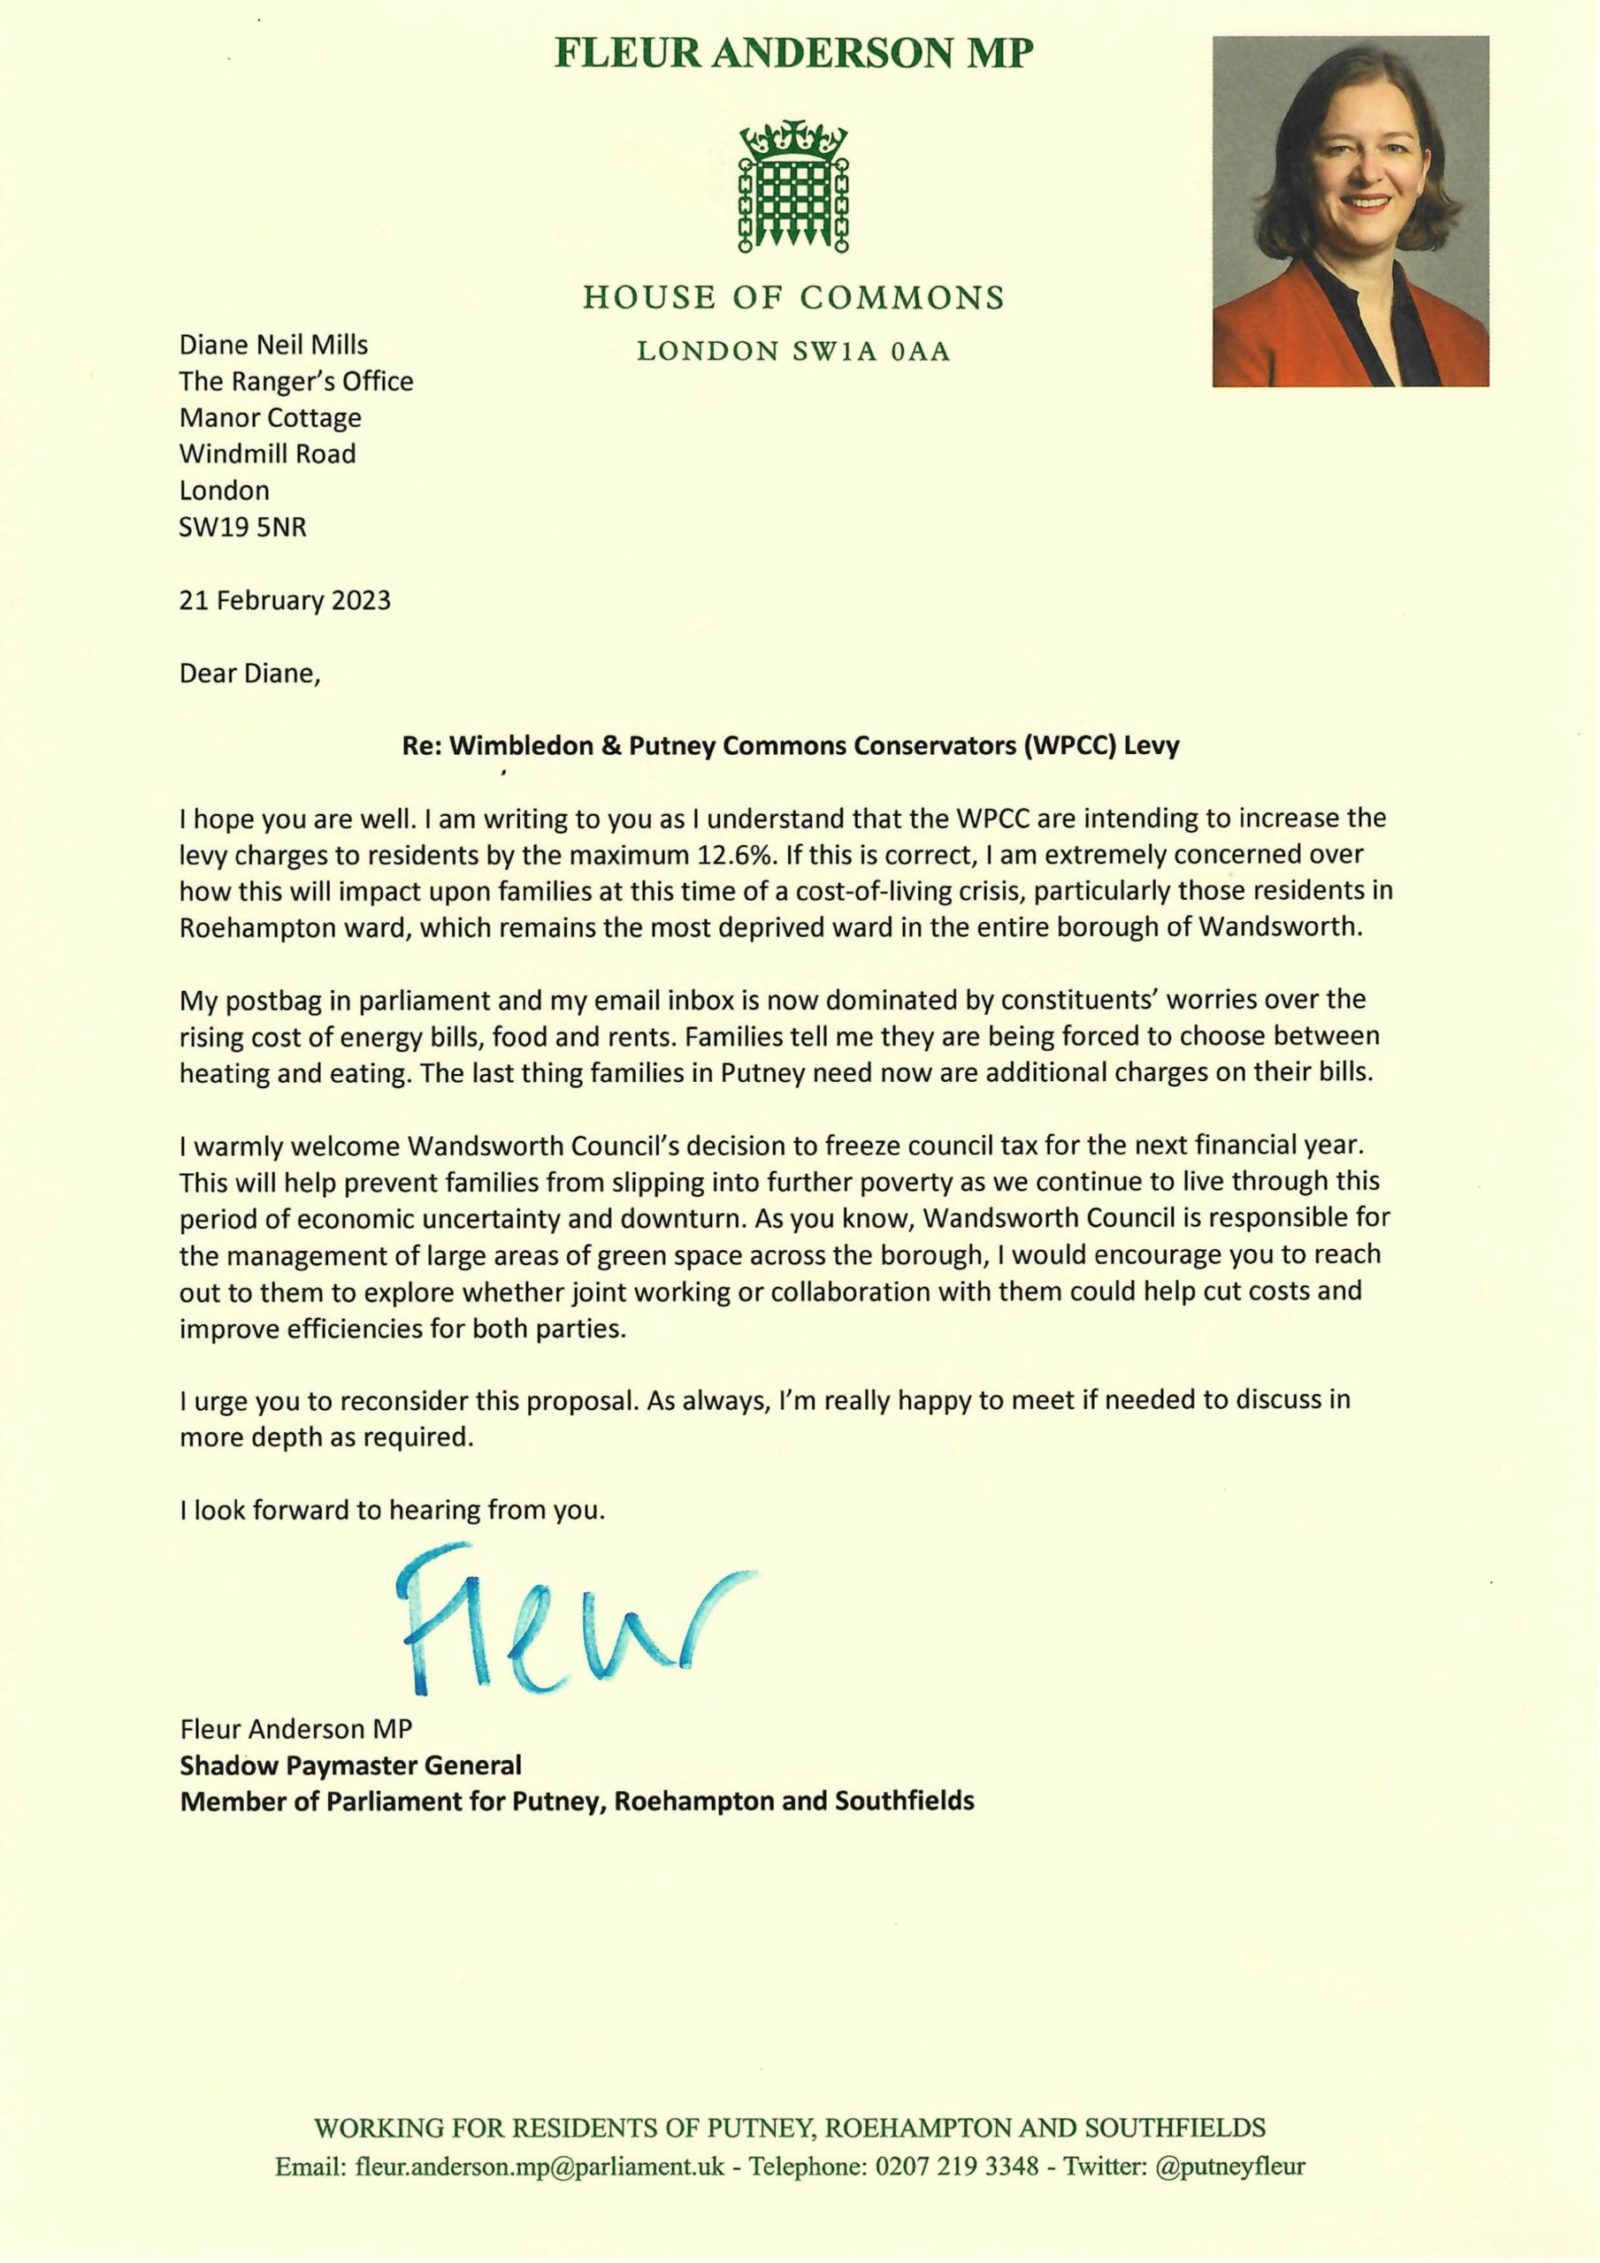 Letter regarding Wimbledon and Putney Commons Conservators Levy